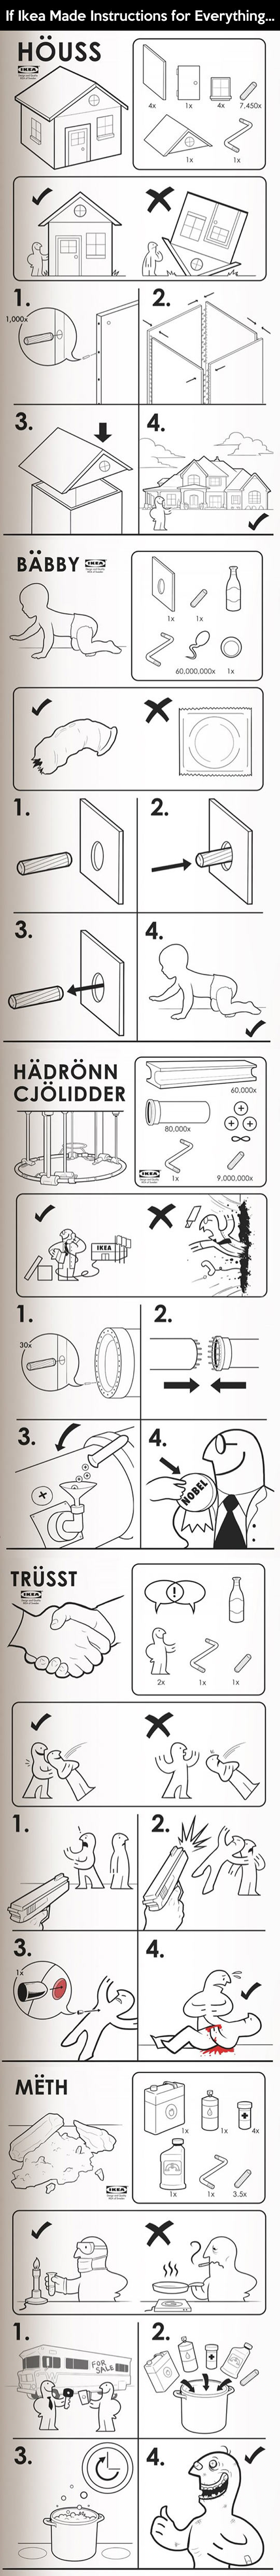 funny-Ikea-instructions-house-baby